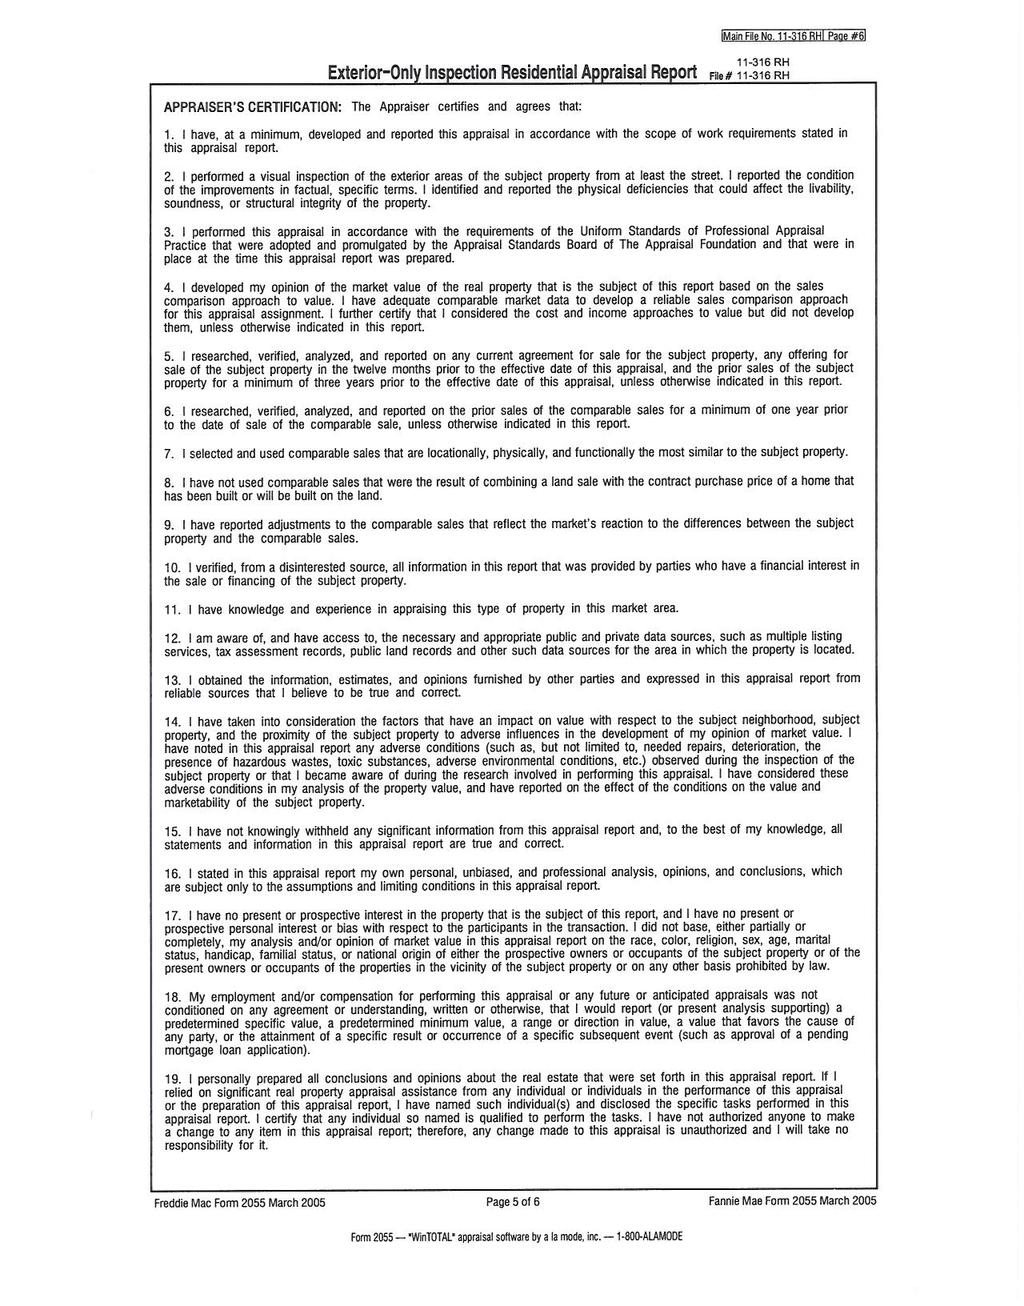 Case 4:11-cv-02830 Document 75-2